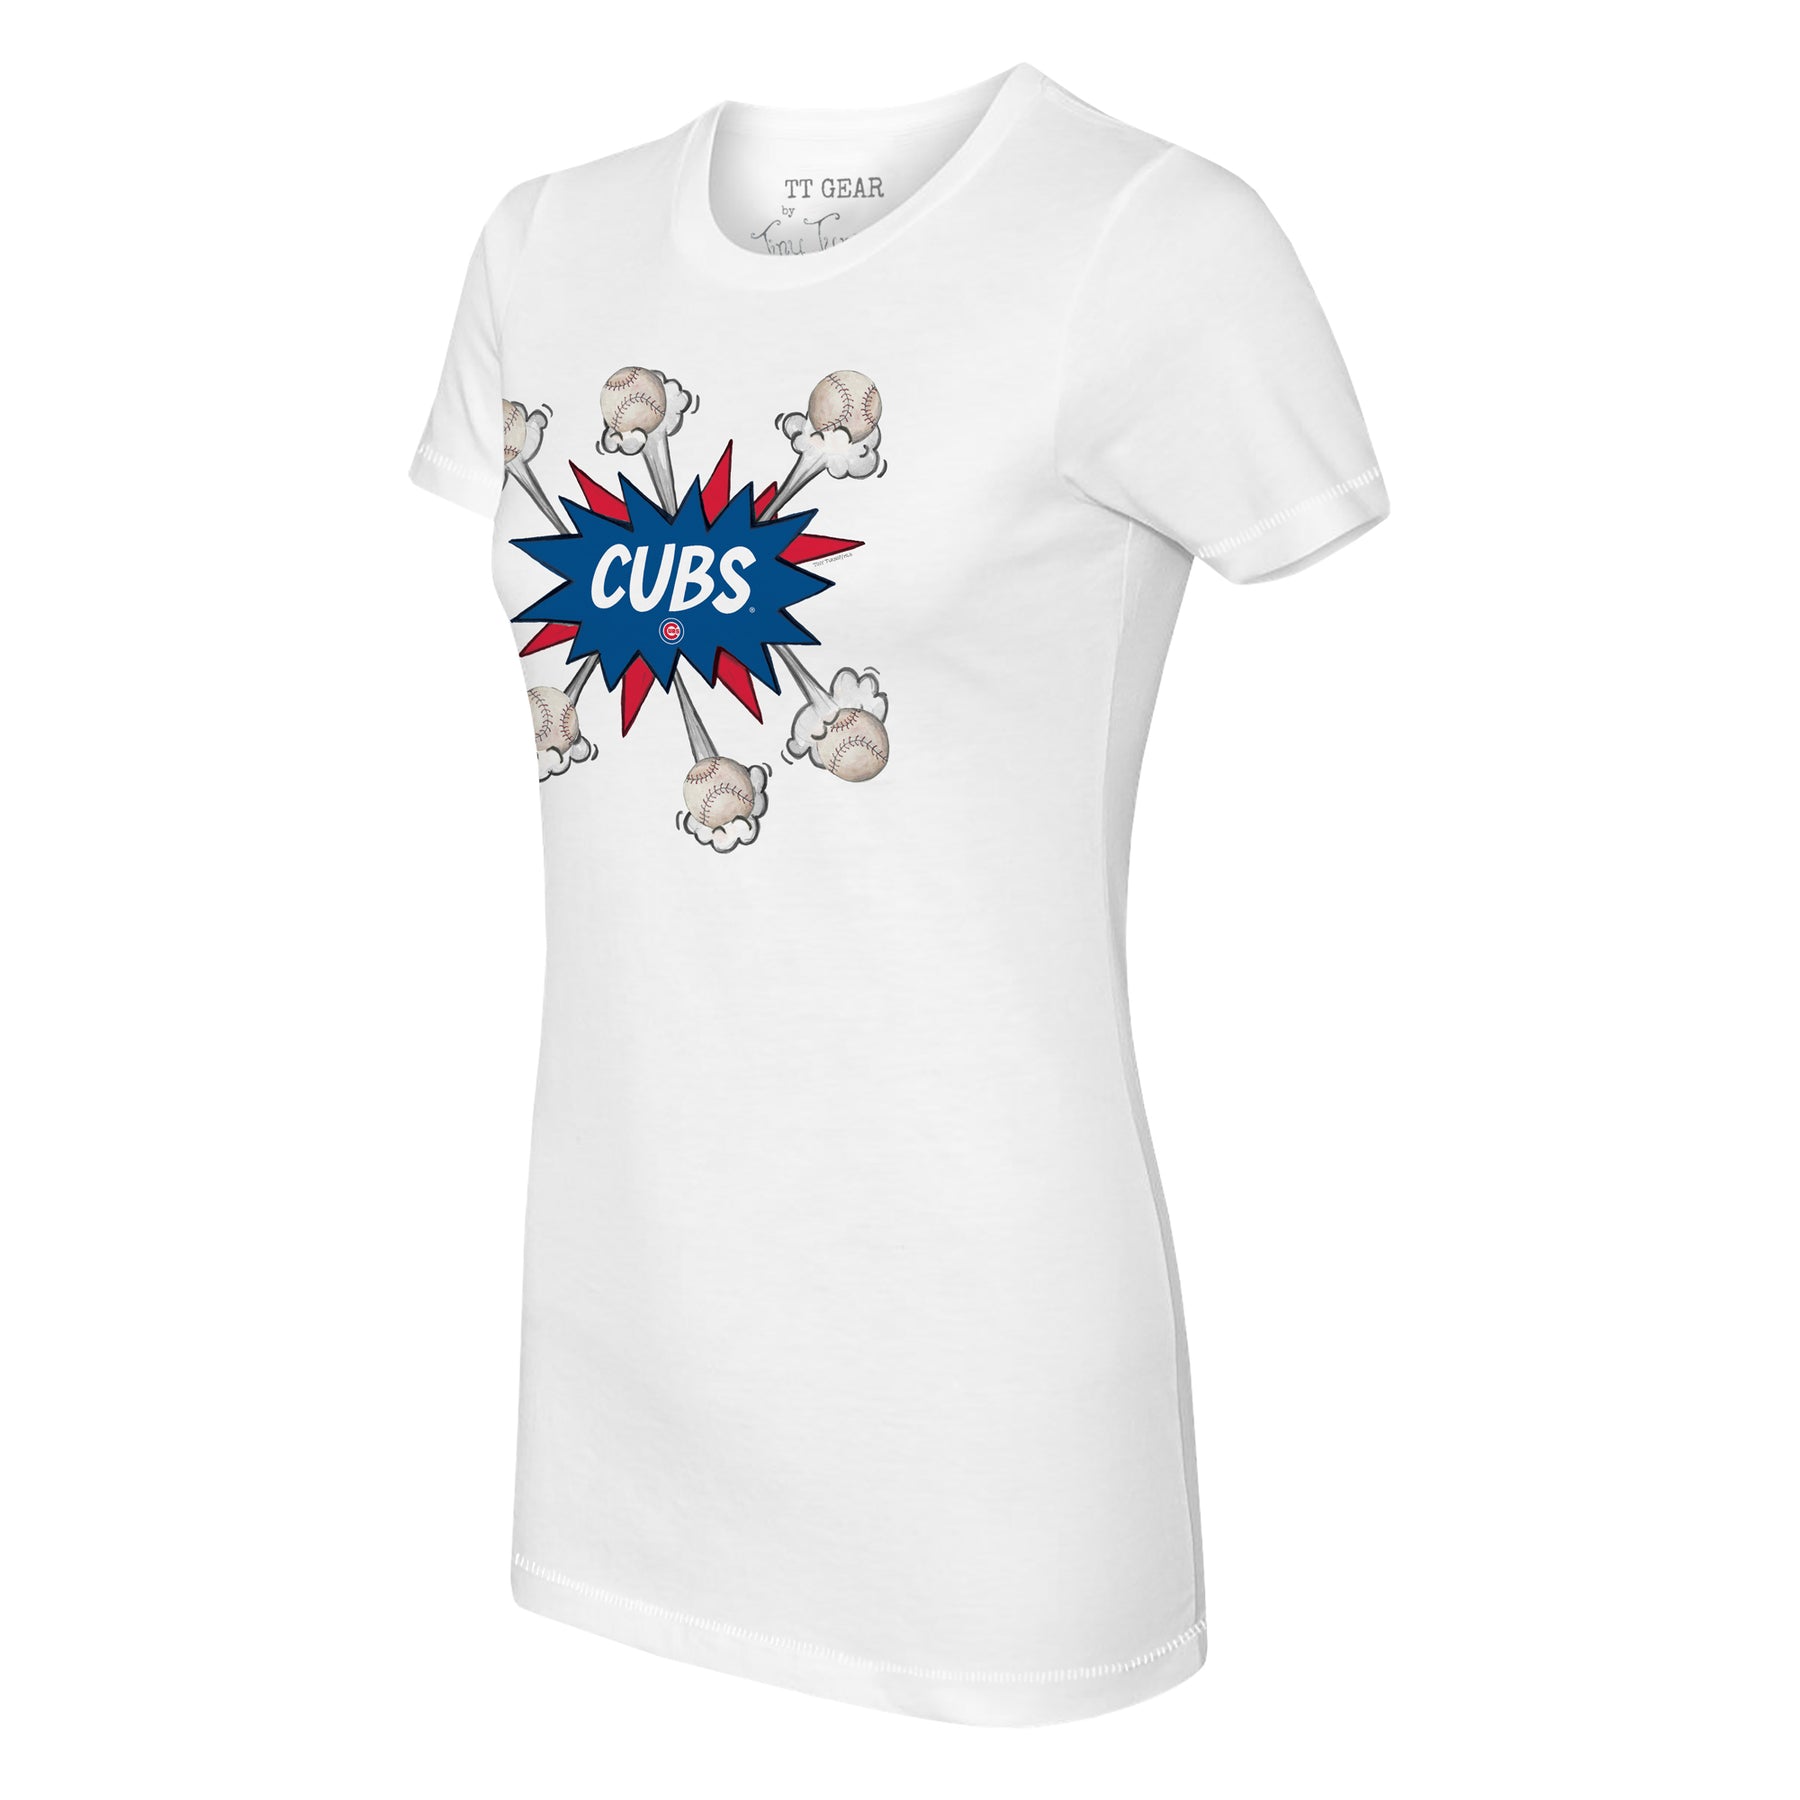 Chicago Cubs T-Shirt, Cubs Shirts, Cubs Baseball Shirts, Tees